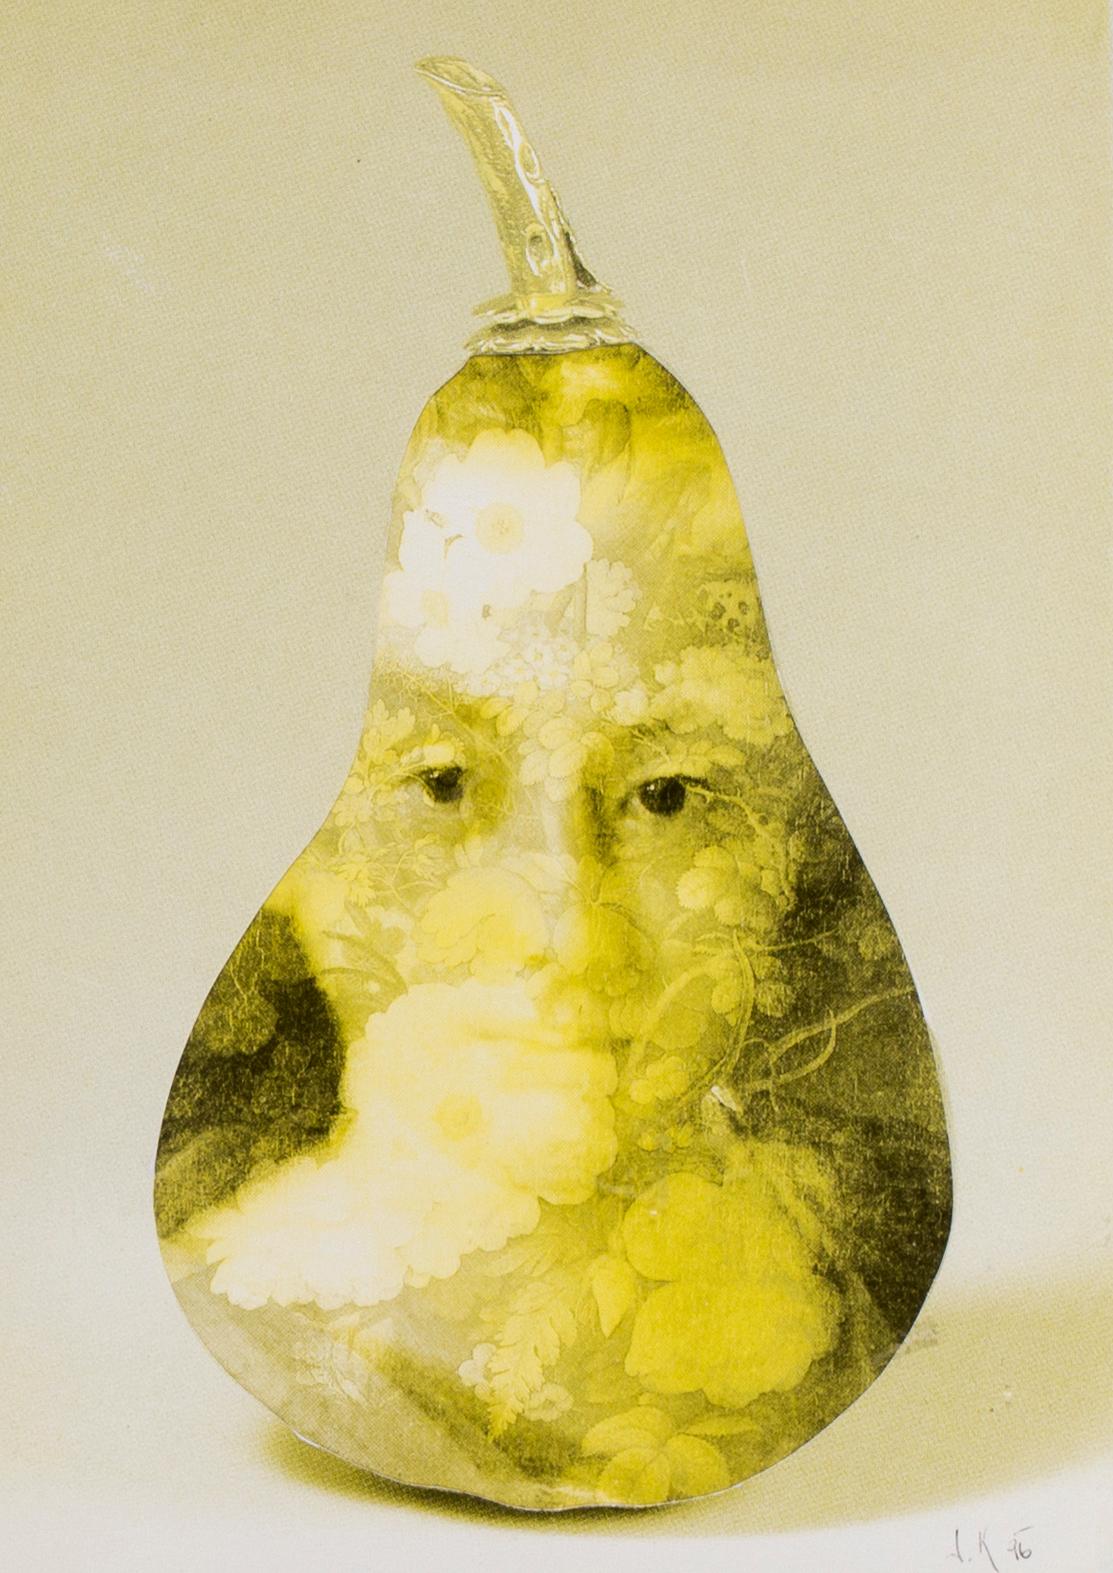 20th Czech Surrealist collage triptych of pears by Jiri Kolar For Sale 2